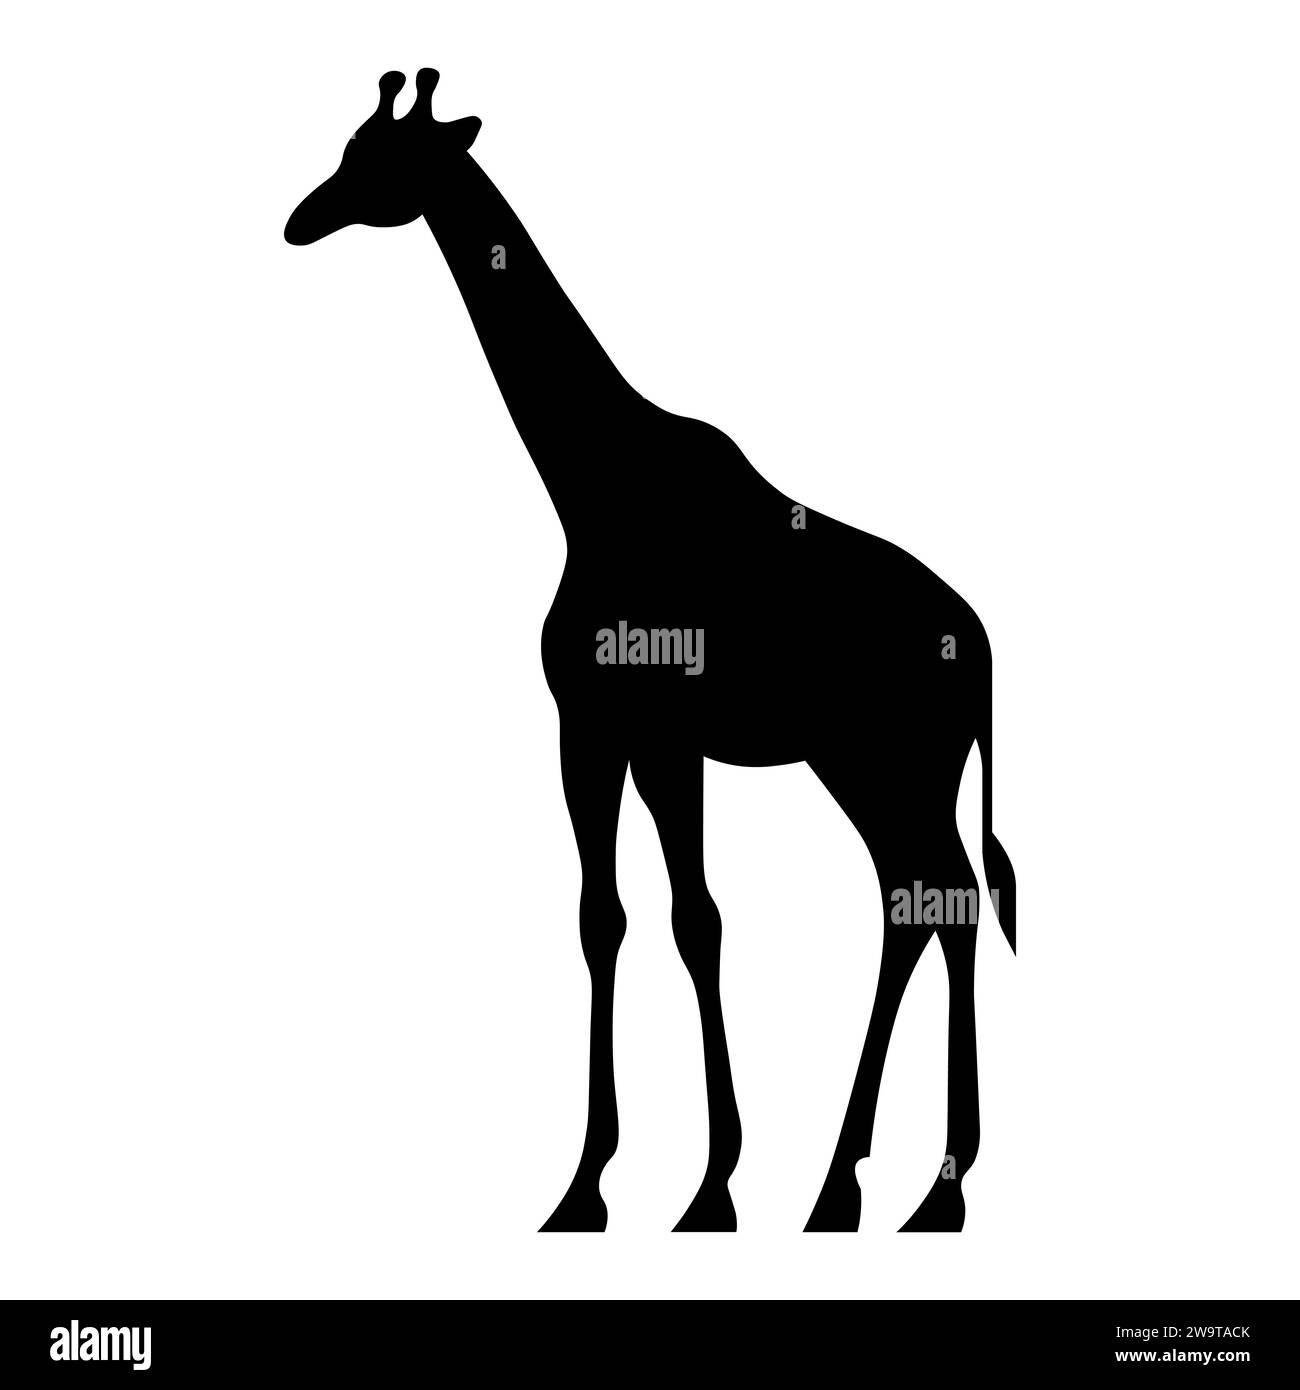 Giraffe black vector icon on white background Stock Vector